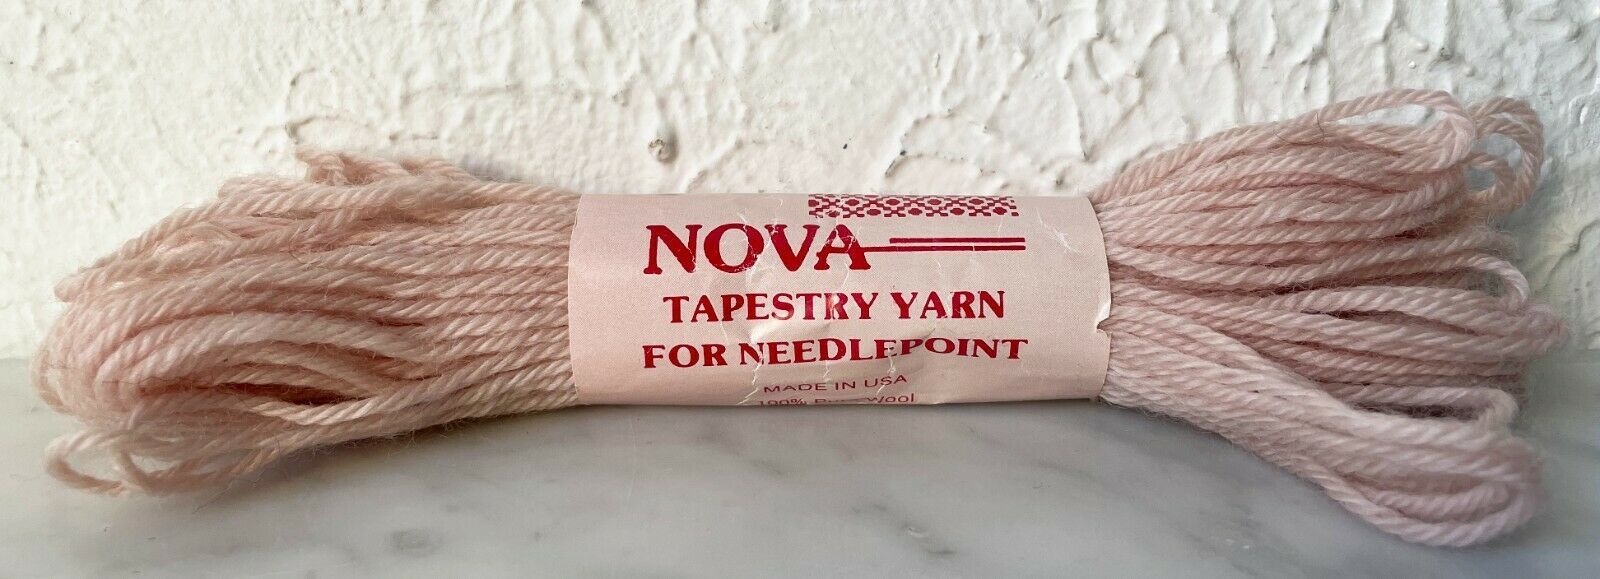 Vintage Nova Tapestry Needlepoint Virgin Wool Yarn - 1 Skein Color Mauve #827 - $4.70